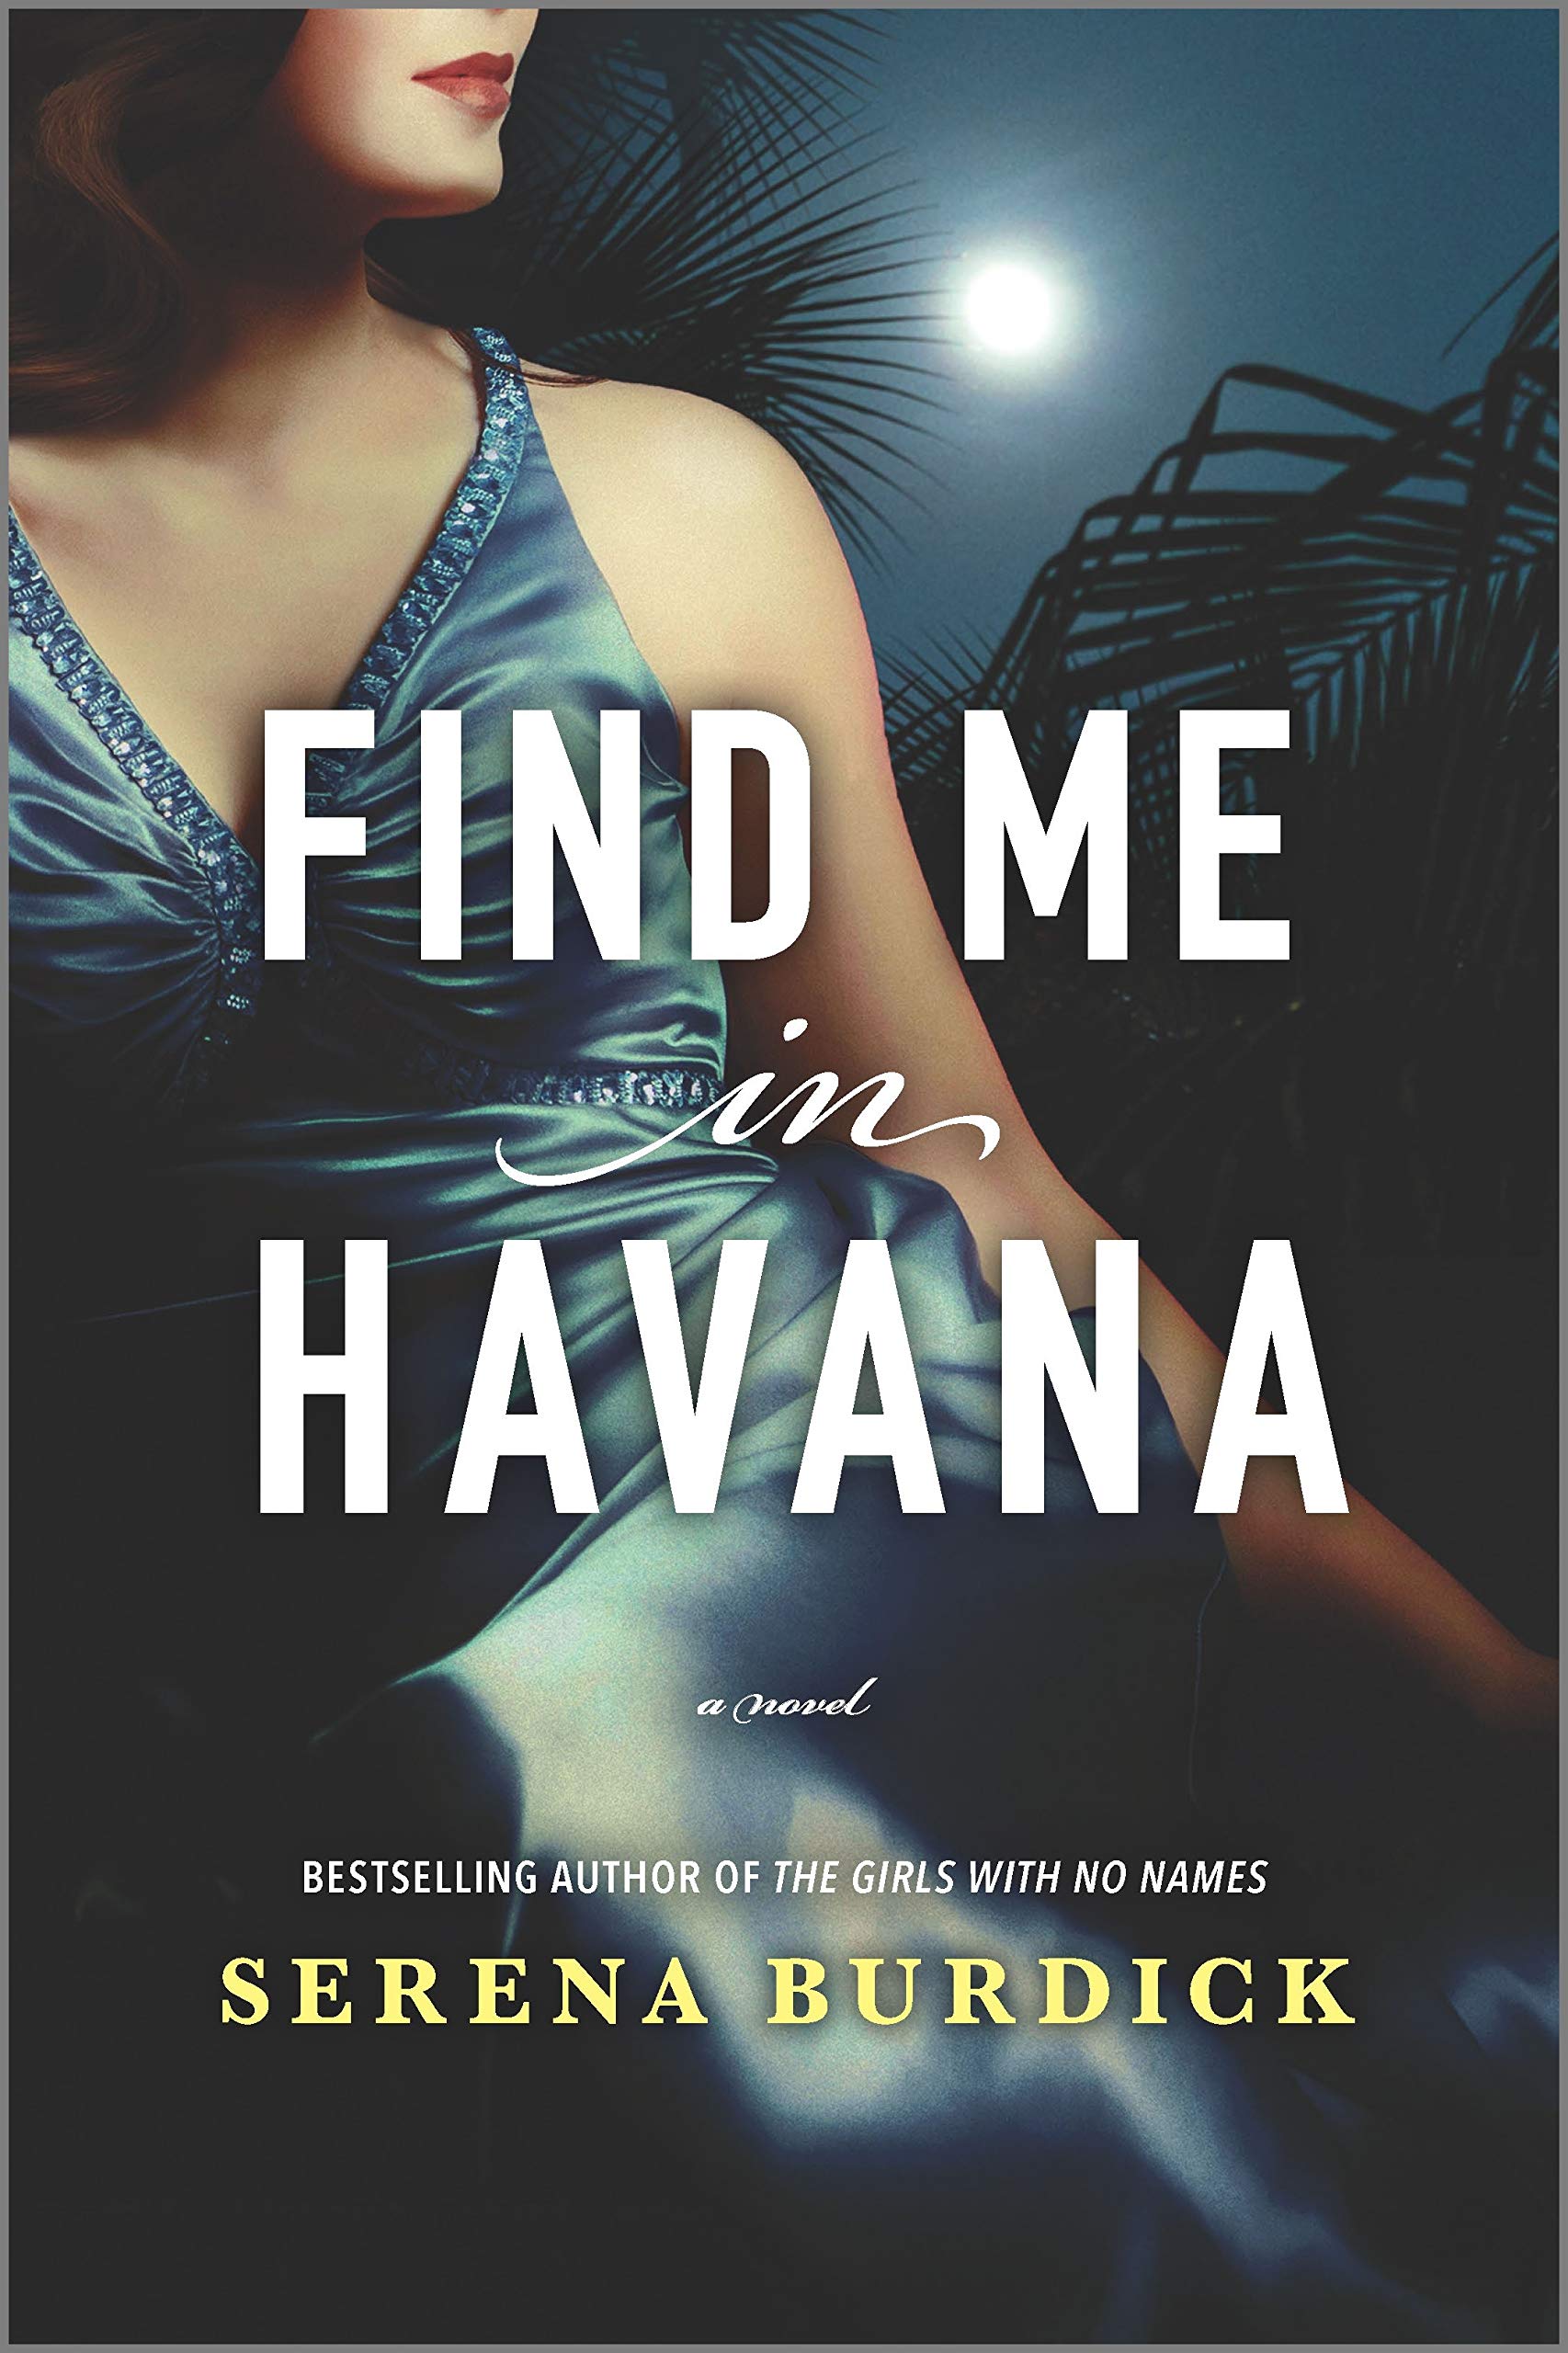 Image for "Find Me in Havana"